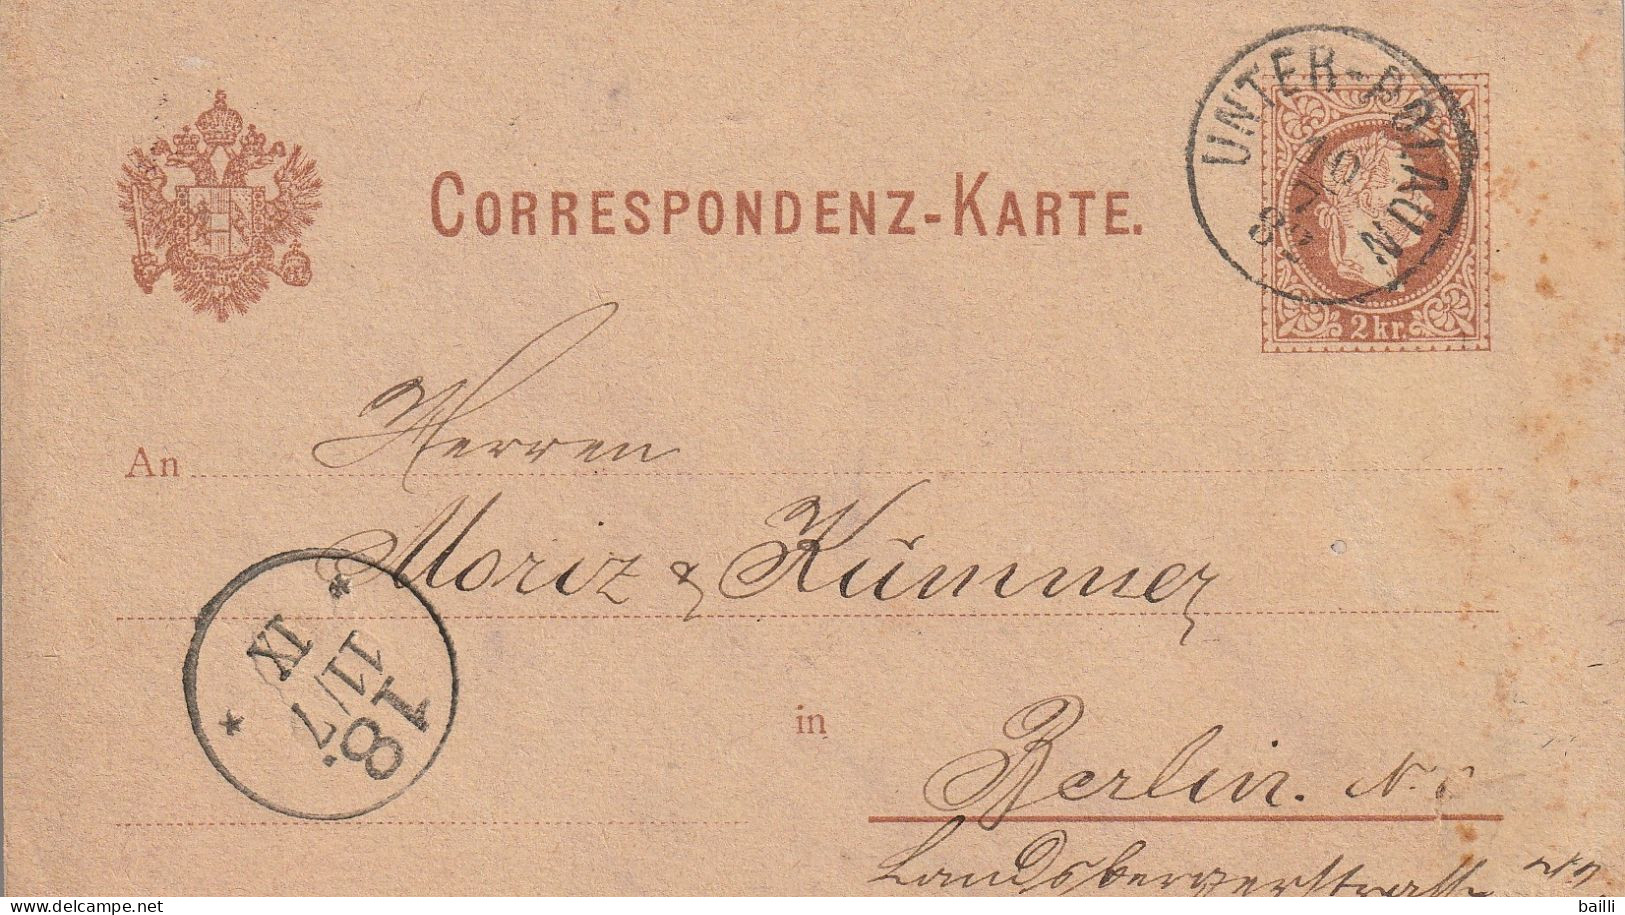 Autriche Entier Postal Unter - Polaun 1882 - Postkarten